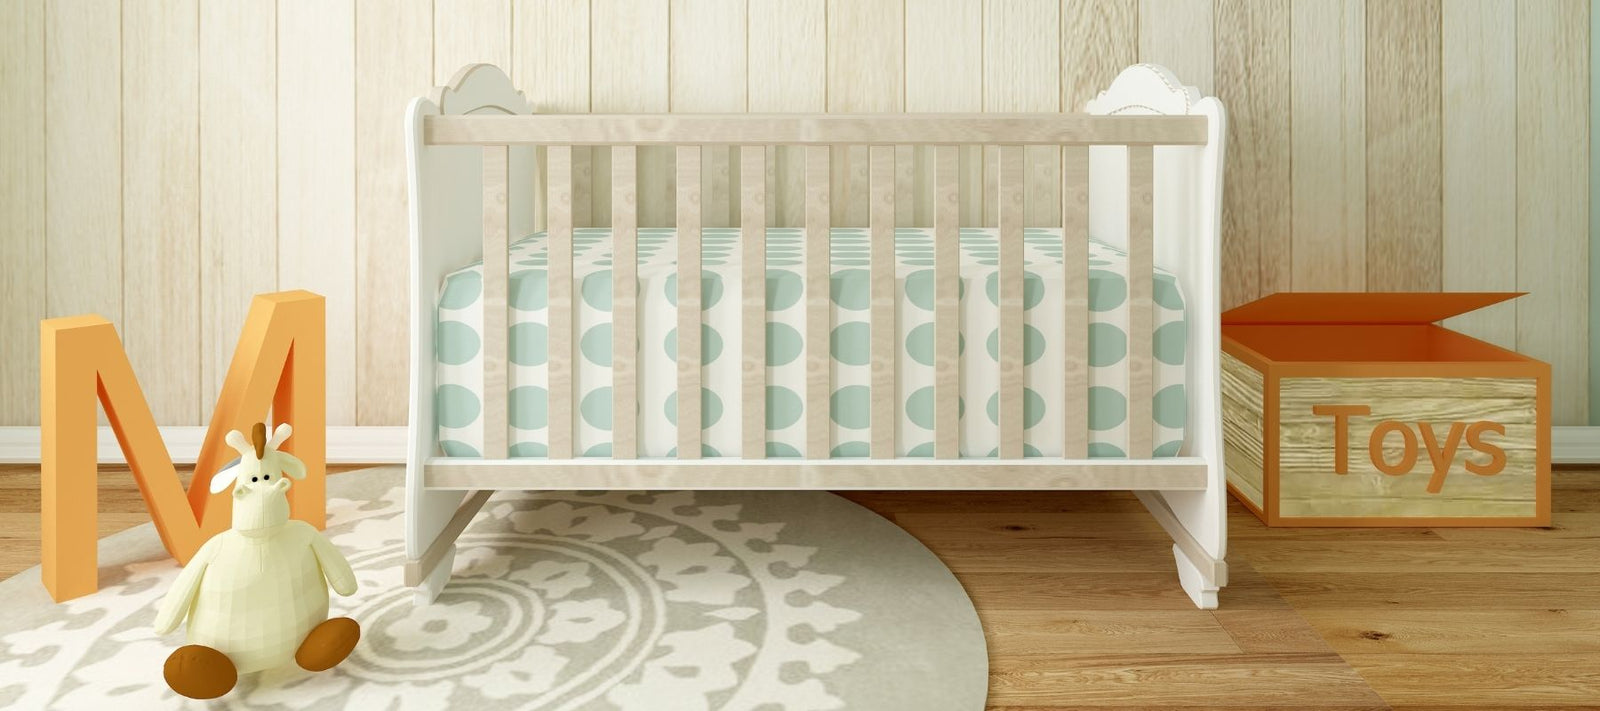 5 Unique Baby Boy Nursery Room Ideas For Your Newborn - Bespoke Baby